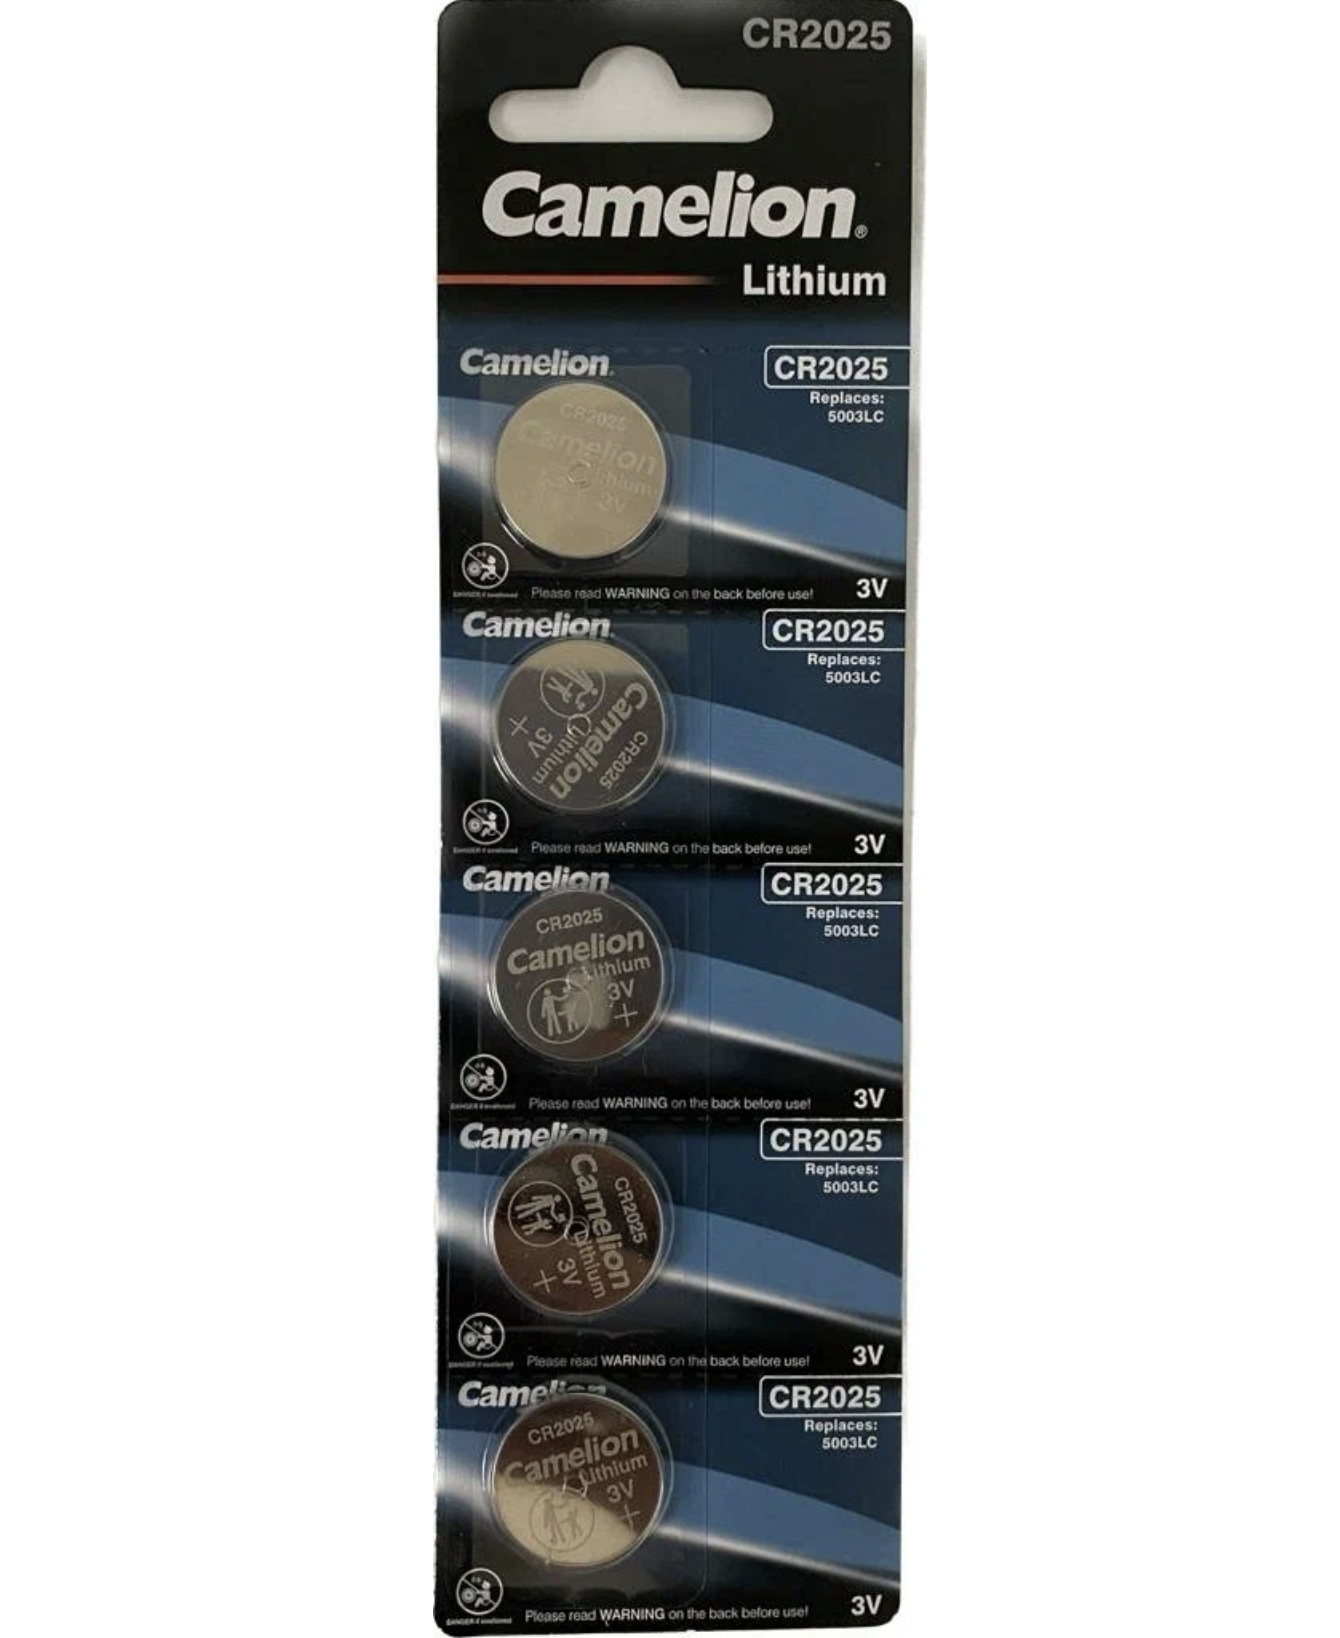   / Camelion CR2025-BP5 -  Lithium 3V 5003LC  5 